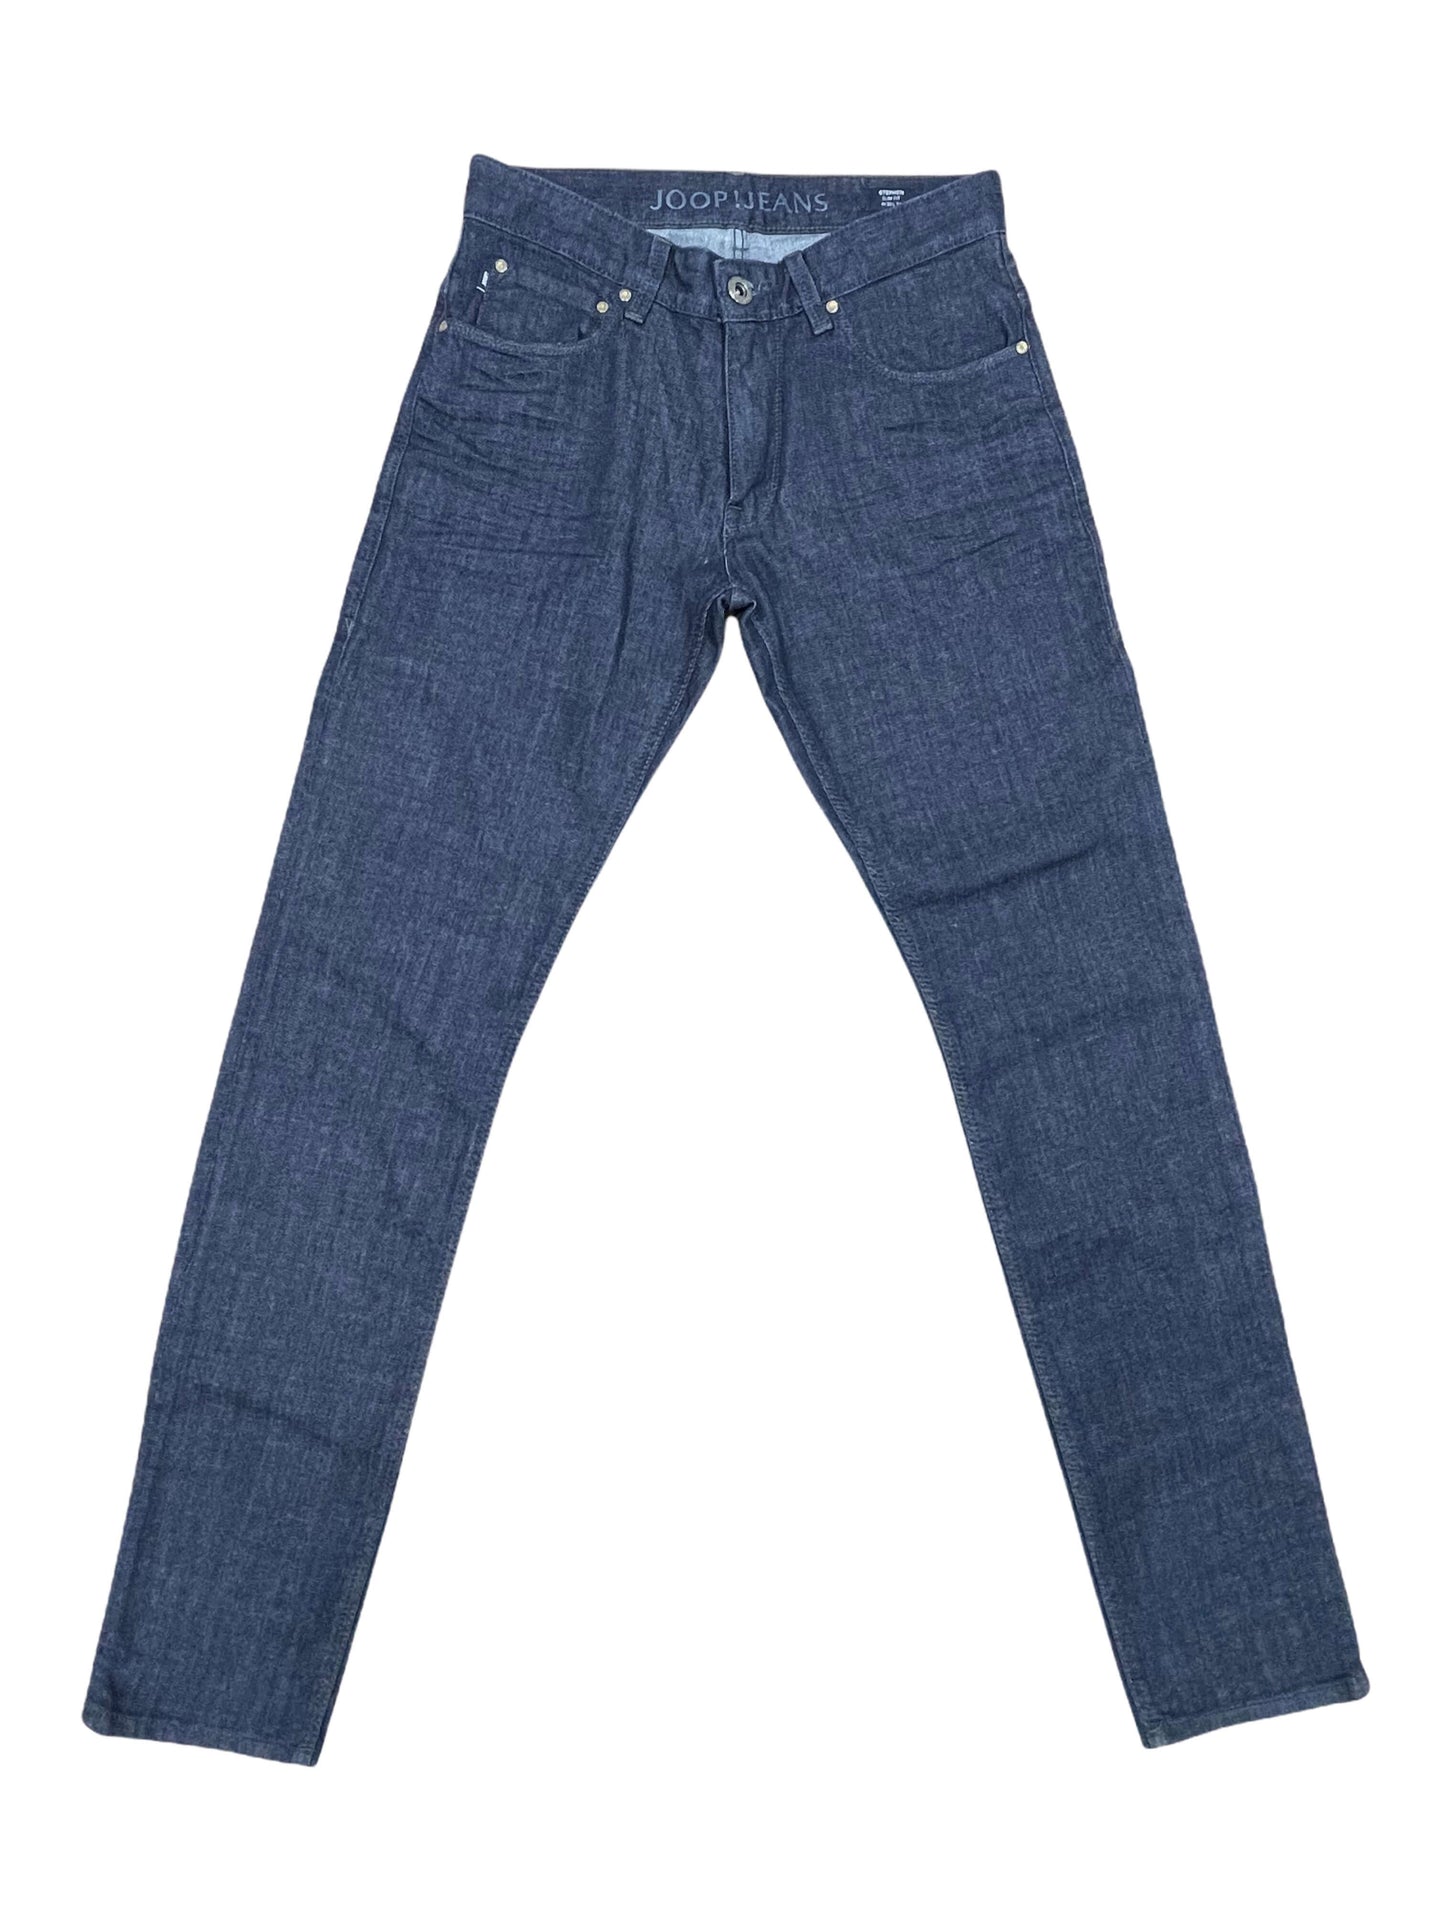 Joop! Denim jeans dark wash - Genuine DesignJOOP Dark Blue Wash Denim Jeans 30x34—Genuine Design luxury consignment